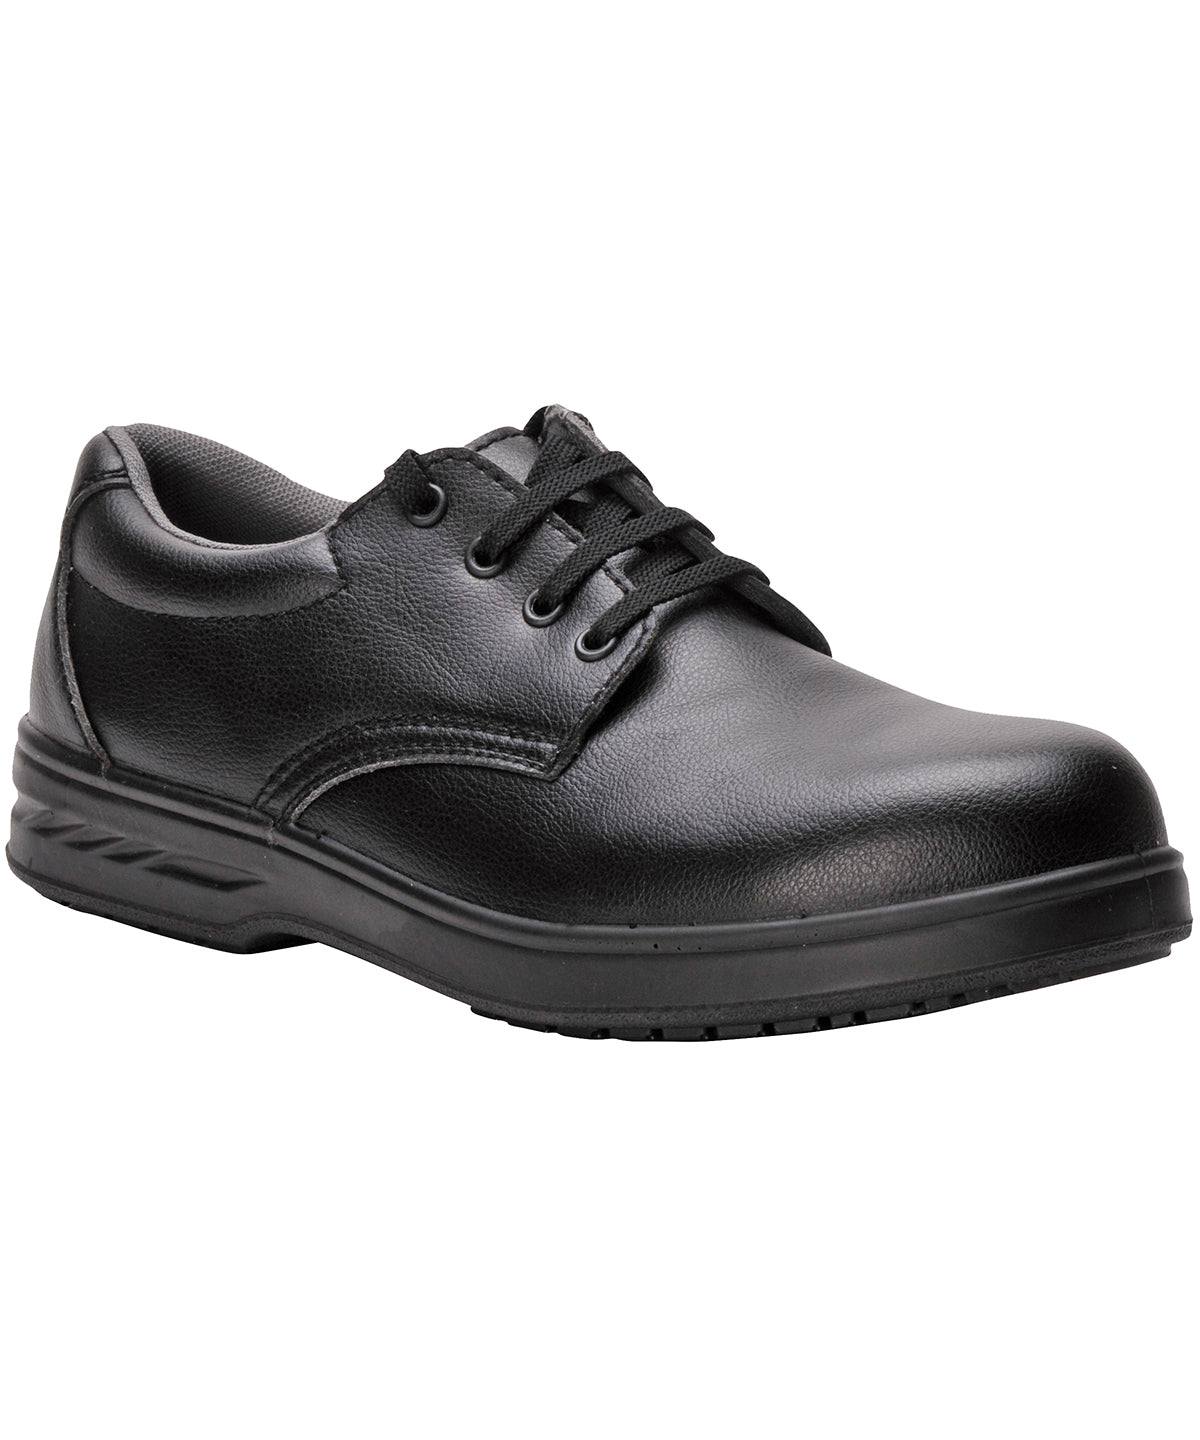 Portwest Steelitelaced safety shoe S2